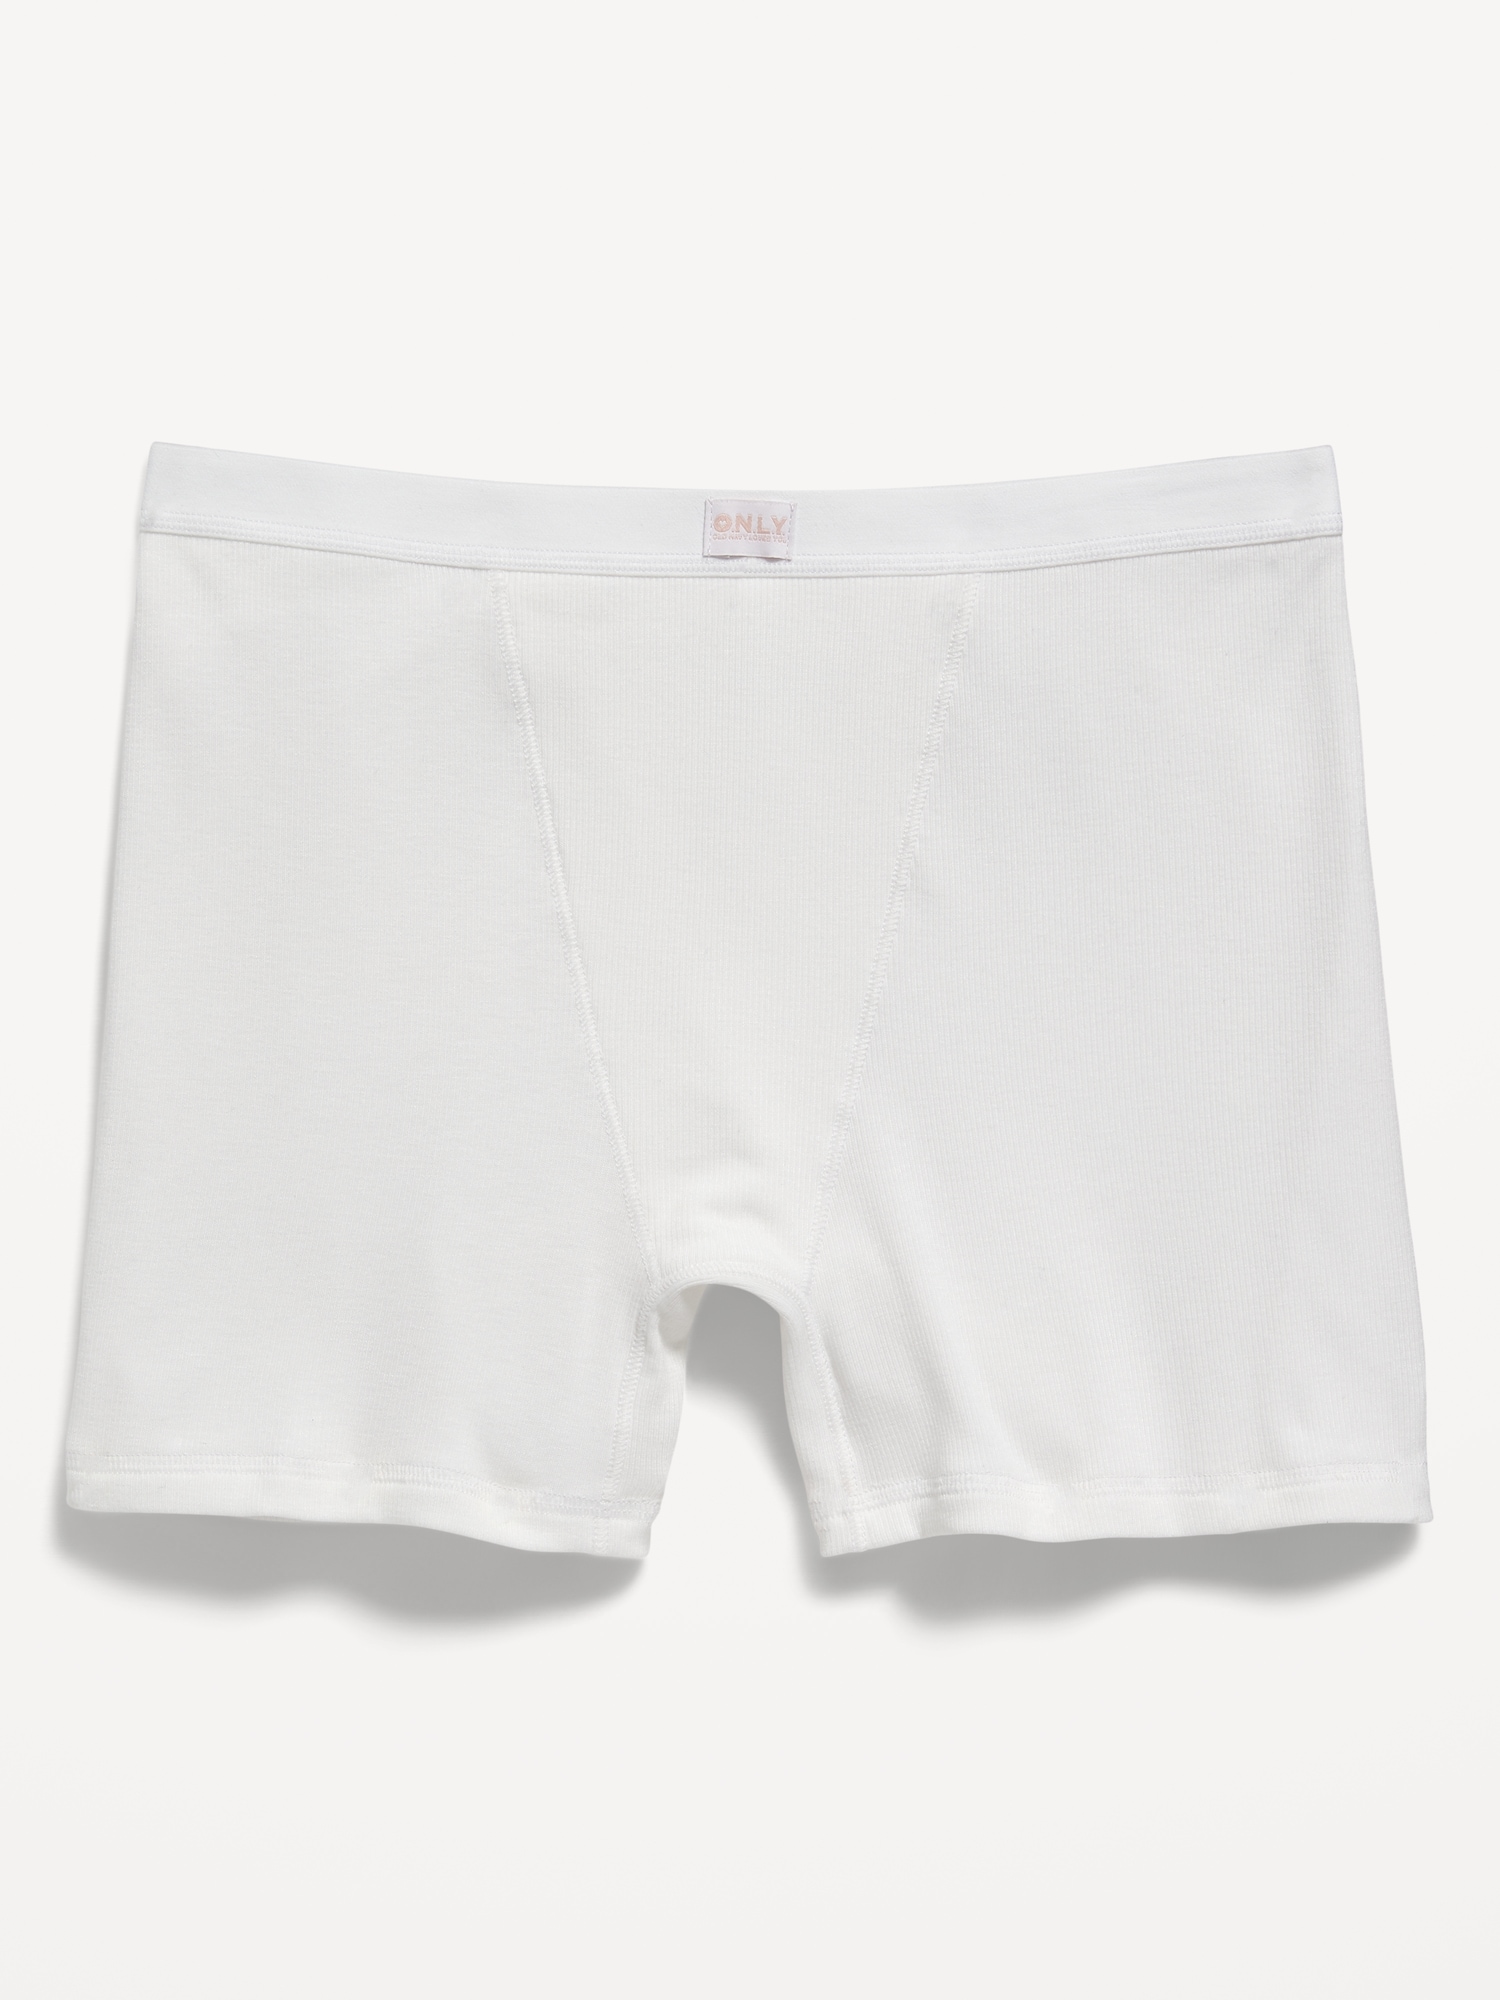 Per Ljung  White Cotton Boxer Briefs 3p – Baltzar